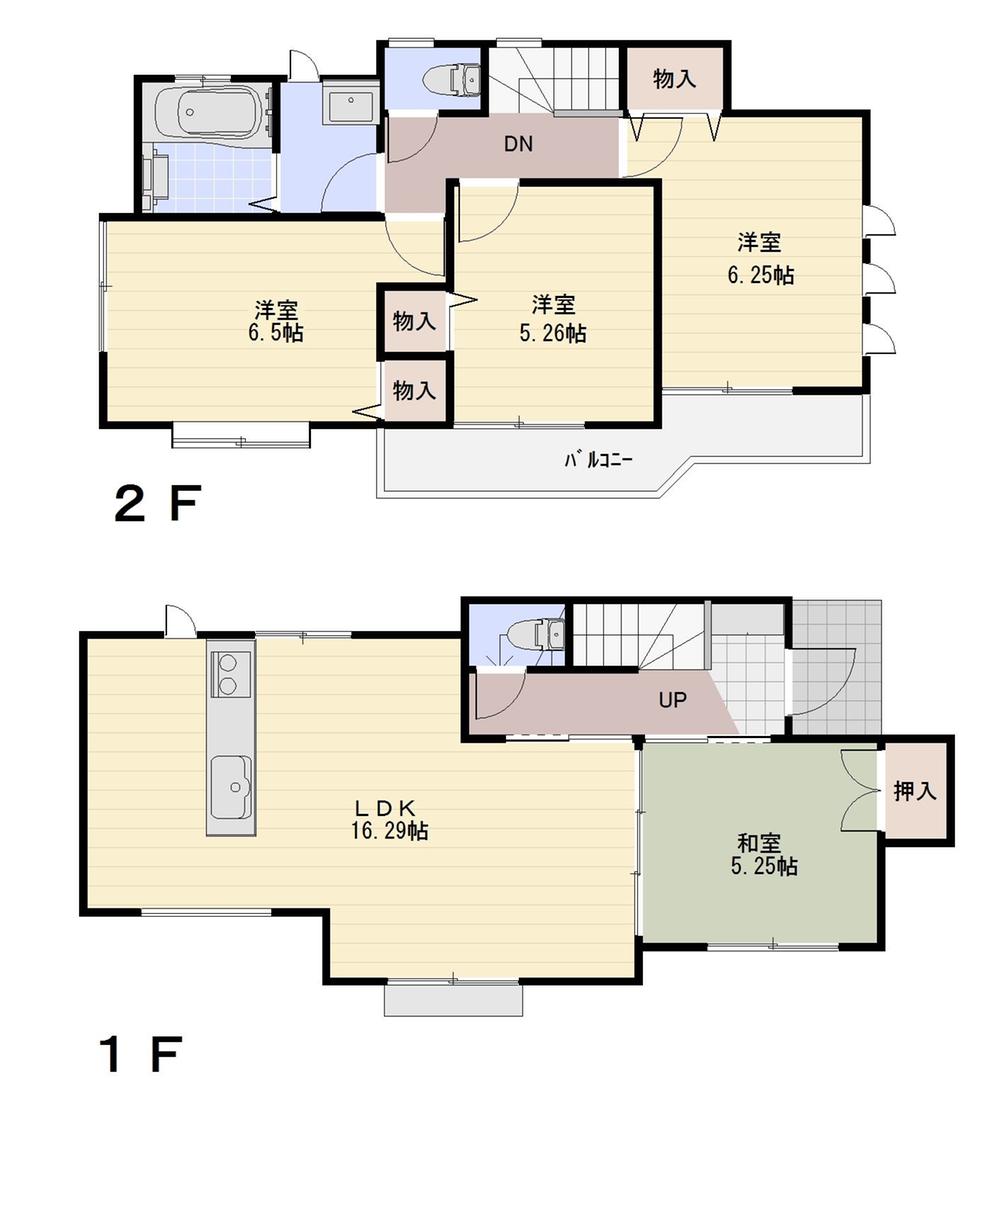 Floor plan. (2), Price 49,800,000 yen, 4LDK, Land area 112.38 sq m , Building area 89.6 sq m